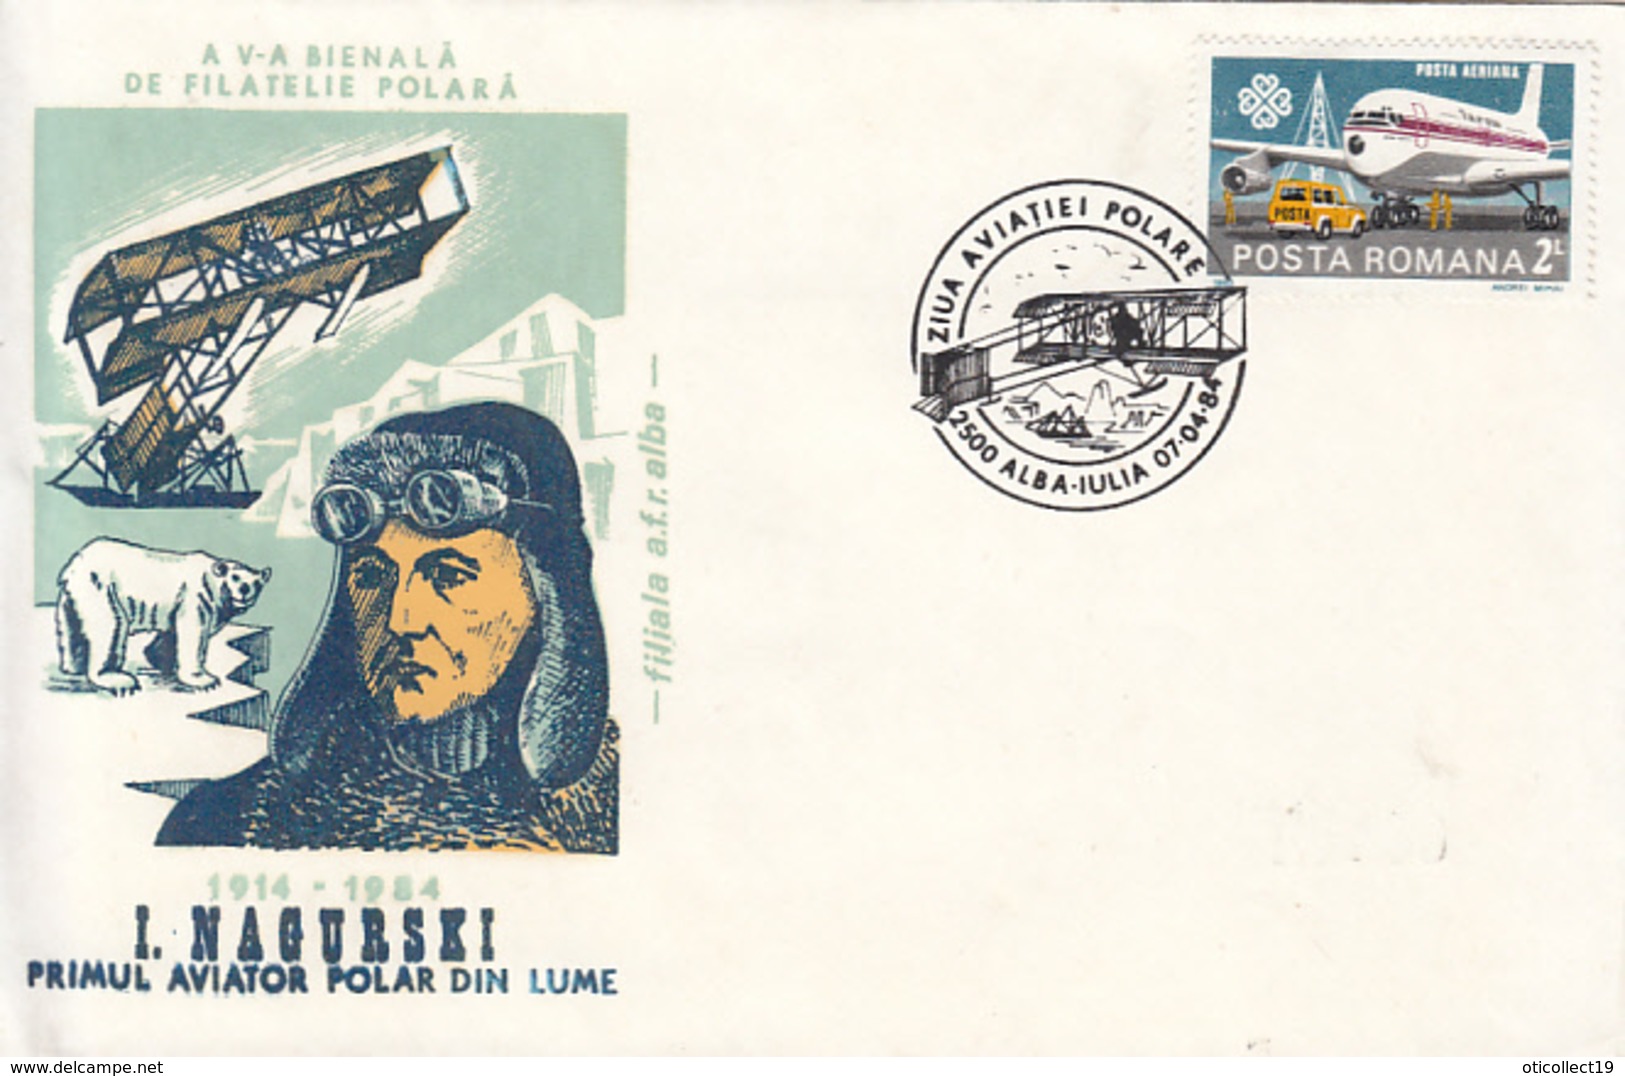 POLAR FLIGHTS, I. NAGURSKI, FIRST POLAR FLIGHT, PILOT, POLAR BEAR, SPECIAL COVER, 1984, ROMANIA - Vuelos Polares